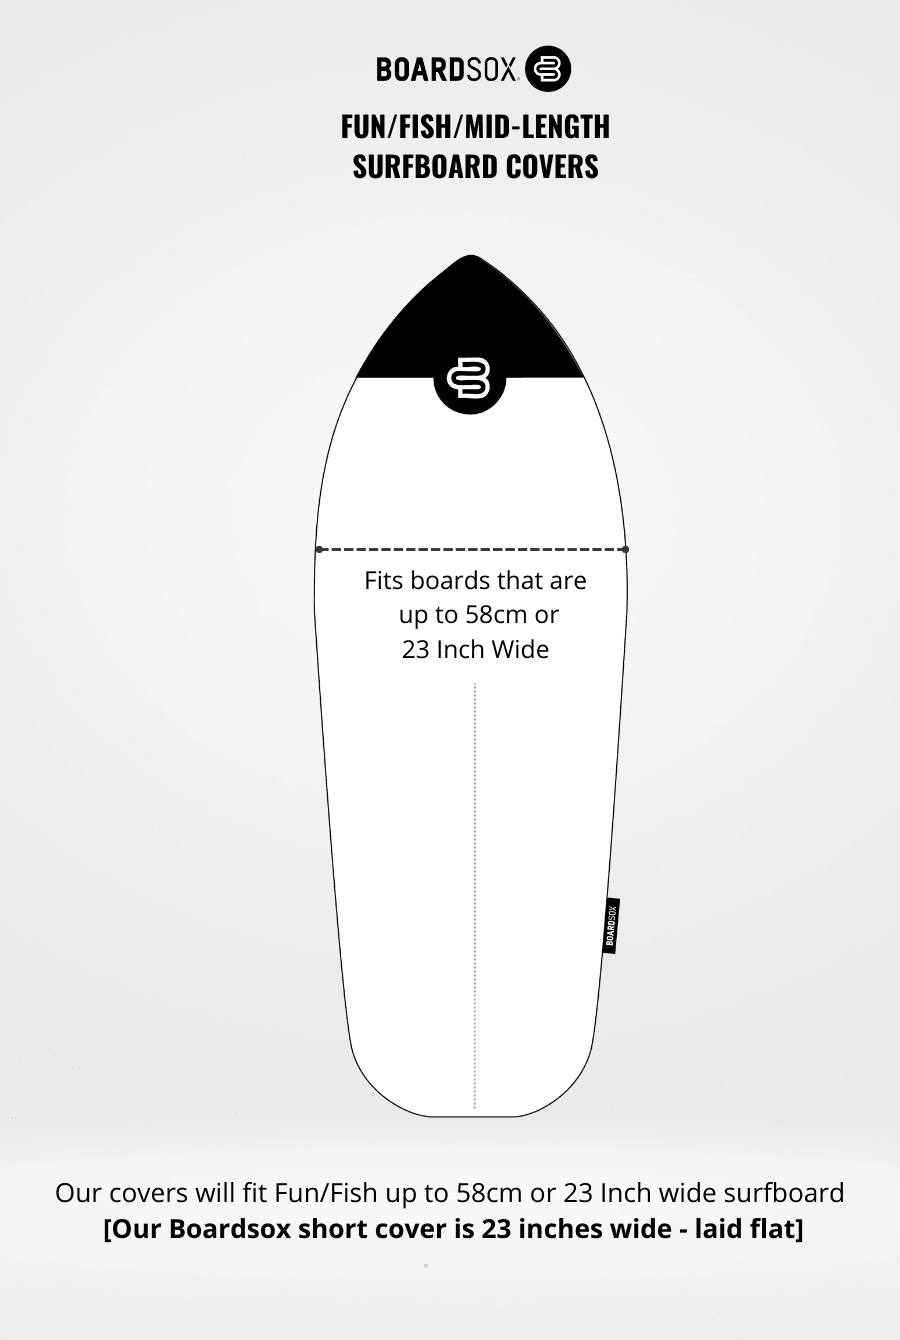 The Honu Fun/Fish Surfboard Cover